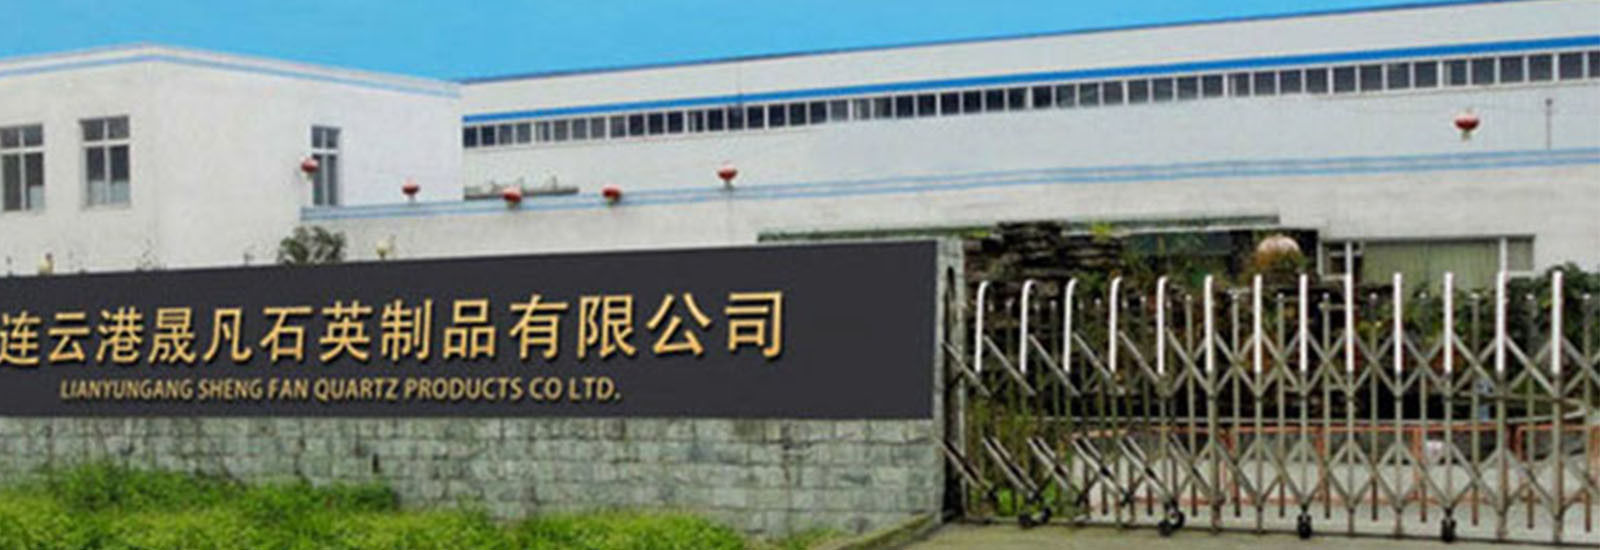 Chiny Lianyungang Shengfan Quartz Product Co., Ltd profil firmy